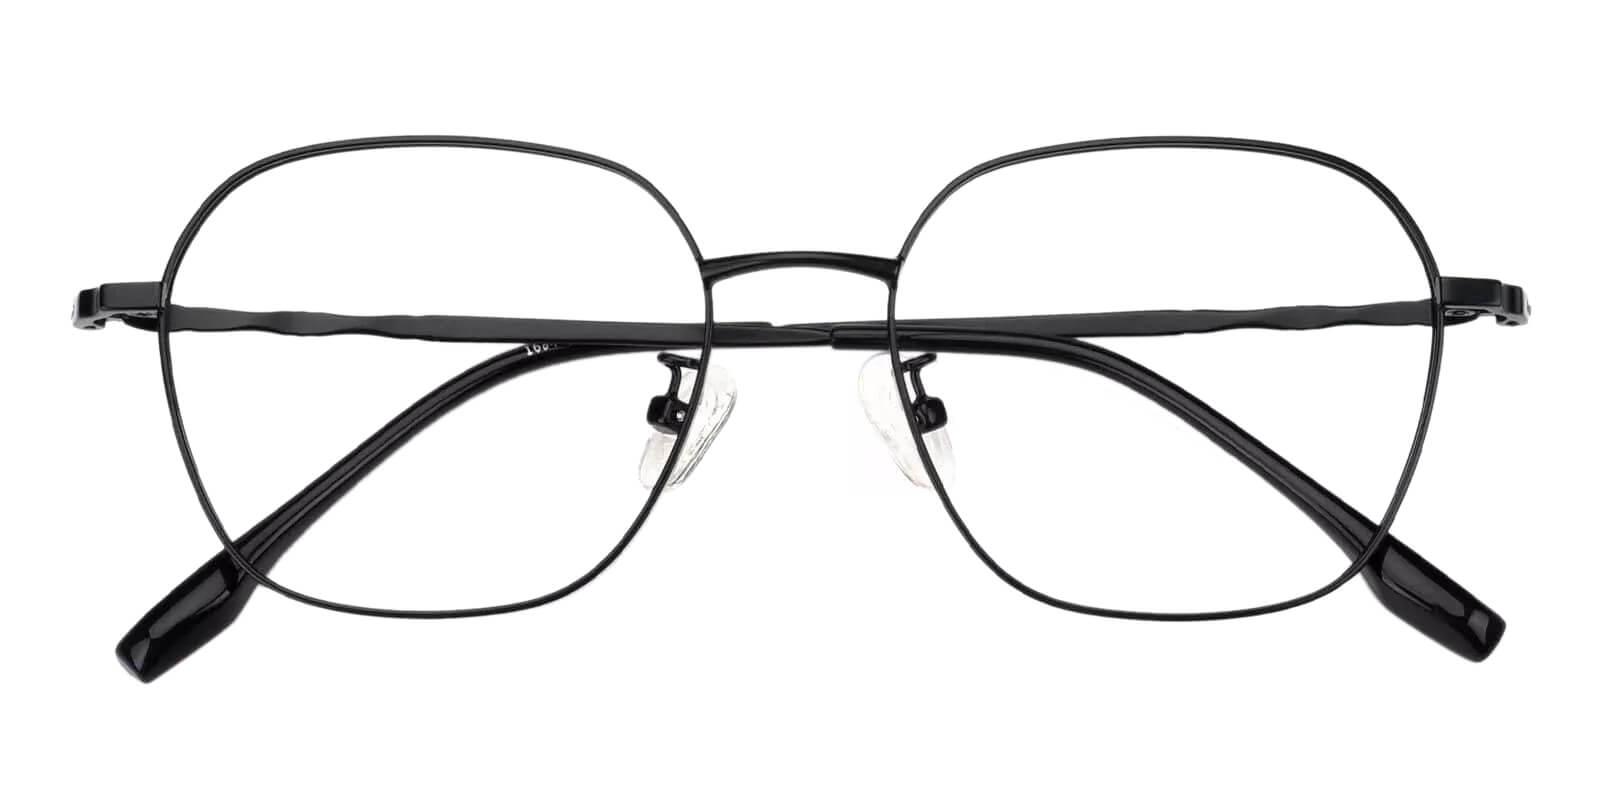 Ruff Black Metal Eyeglasses , Fashion , NosePads Frames from ABBE Glasses